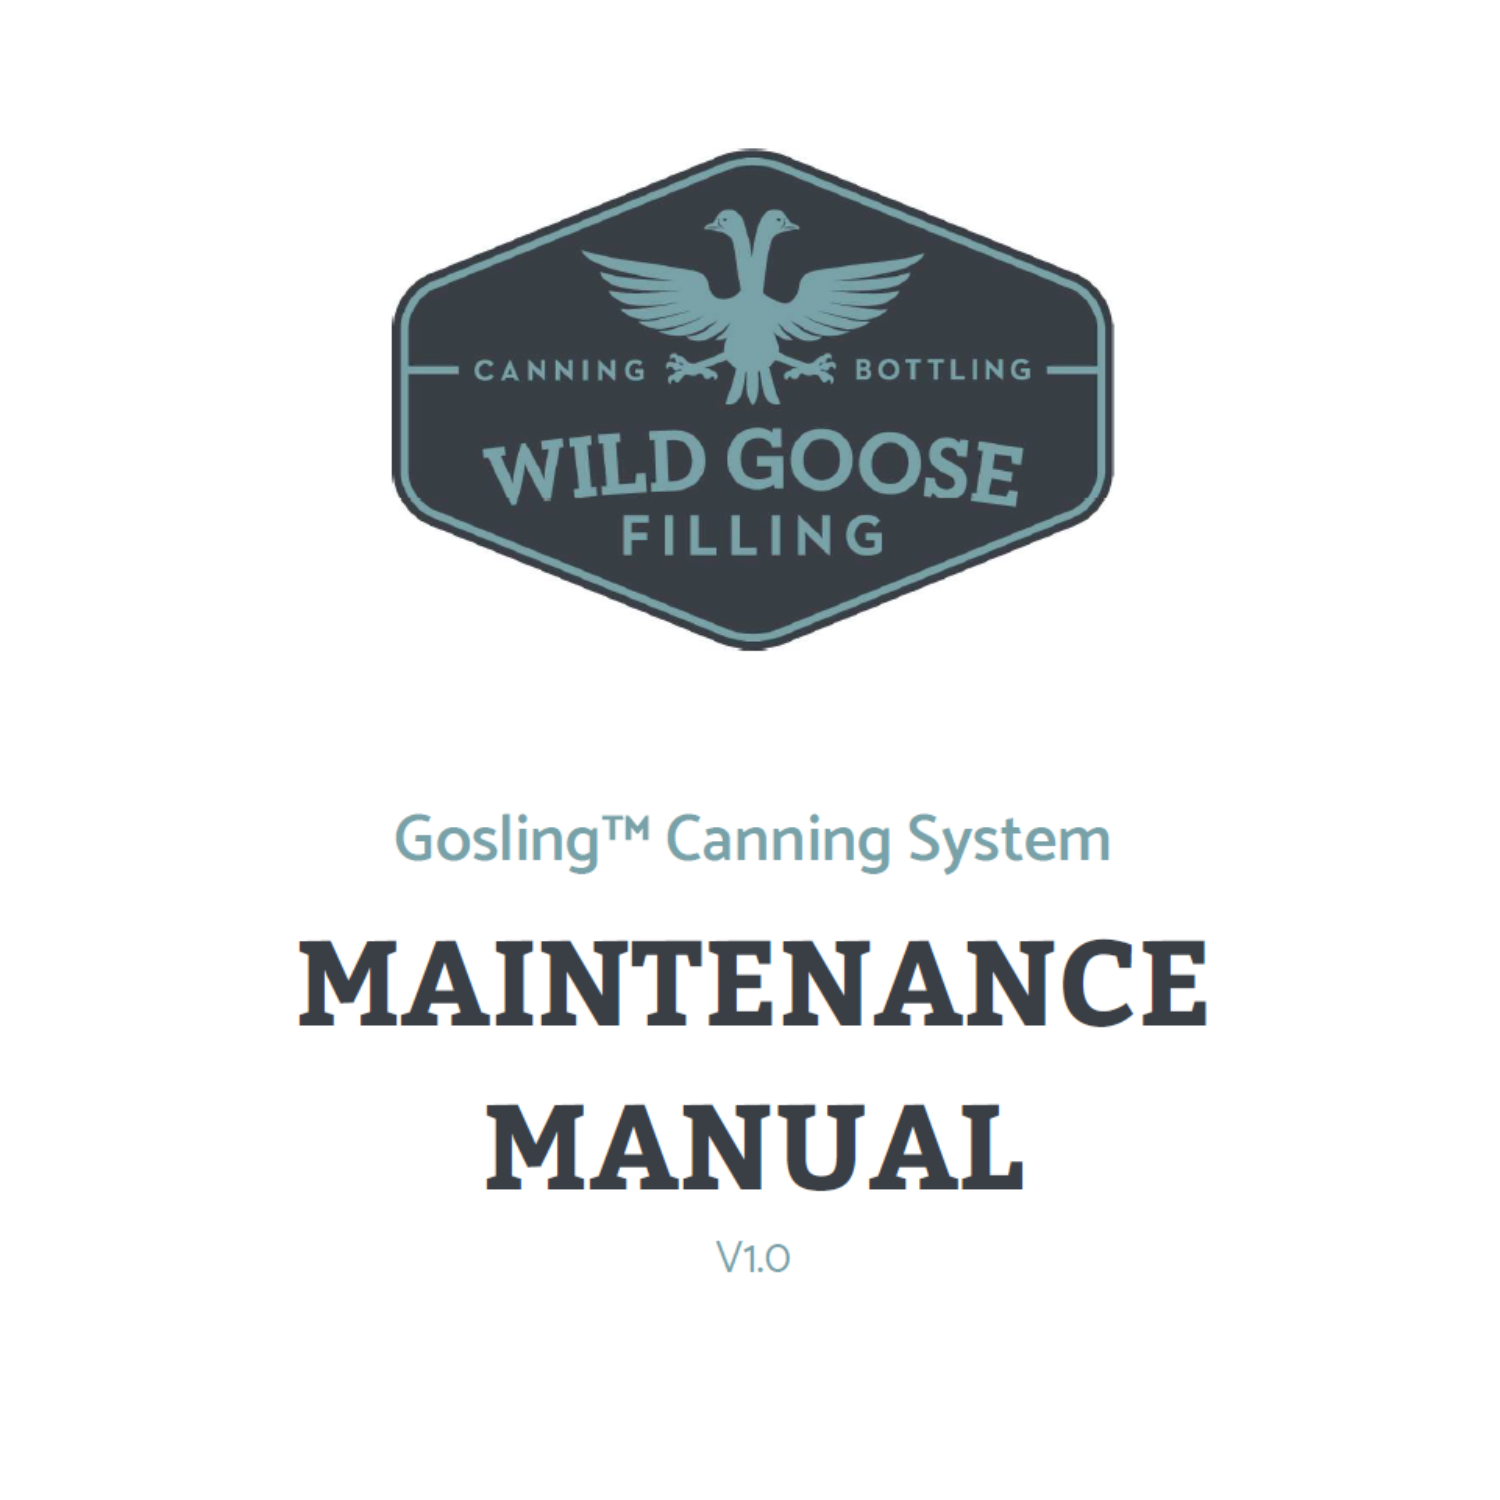 Gosling Canning System Maintenance Manual